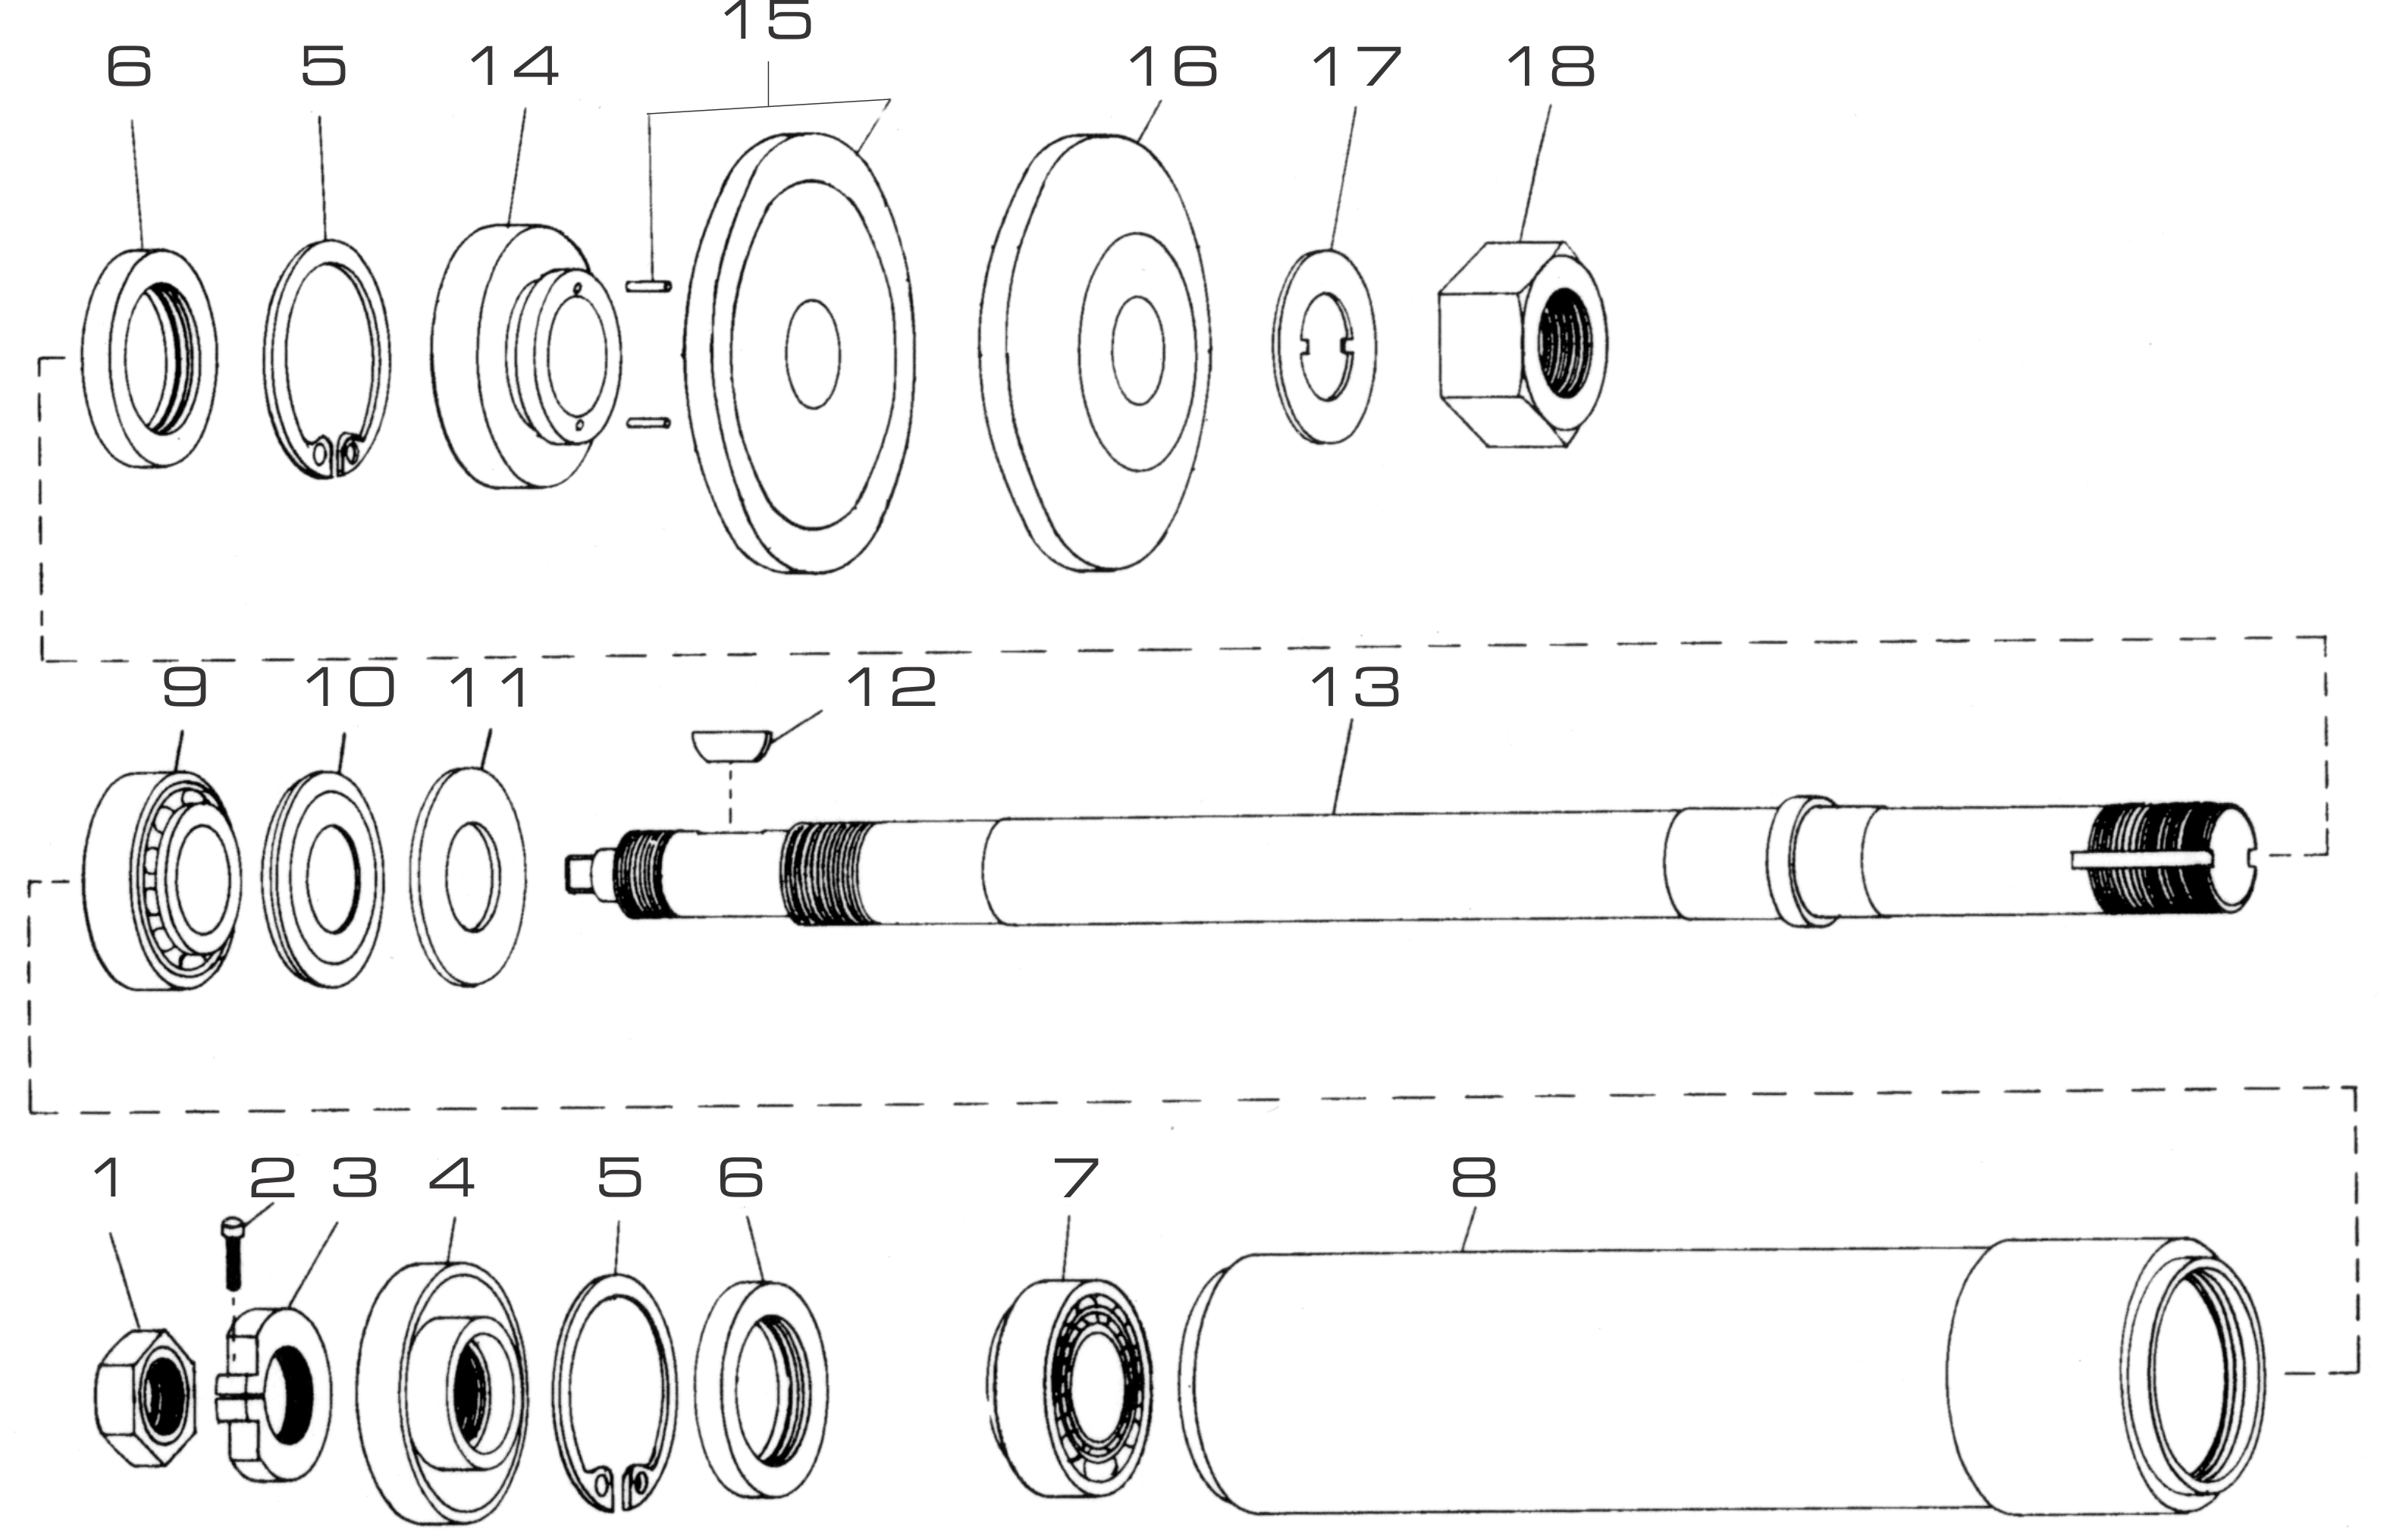 Tool Post Grinder 12" External Spindle Replacement Parts | Dumore Series 12 & 25 Tool Post Grinders